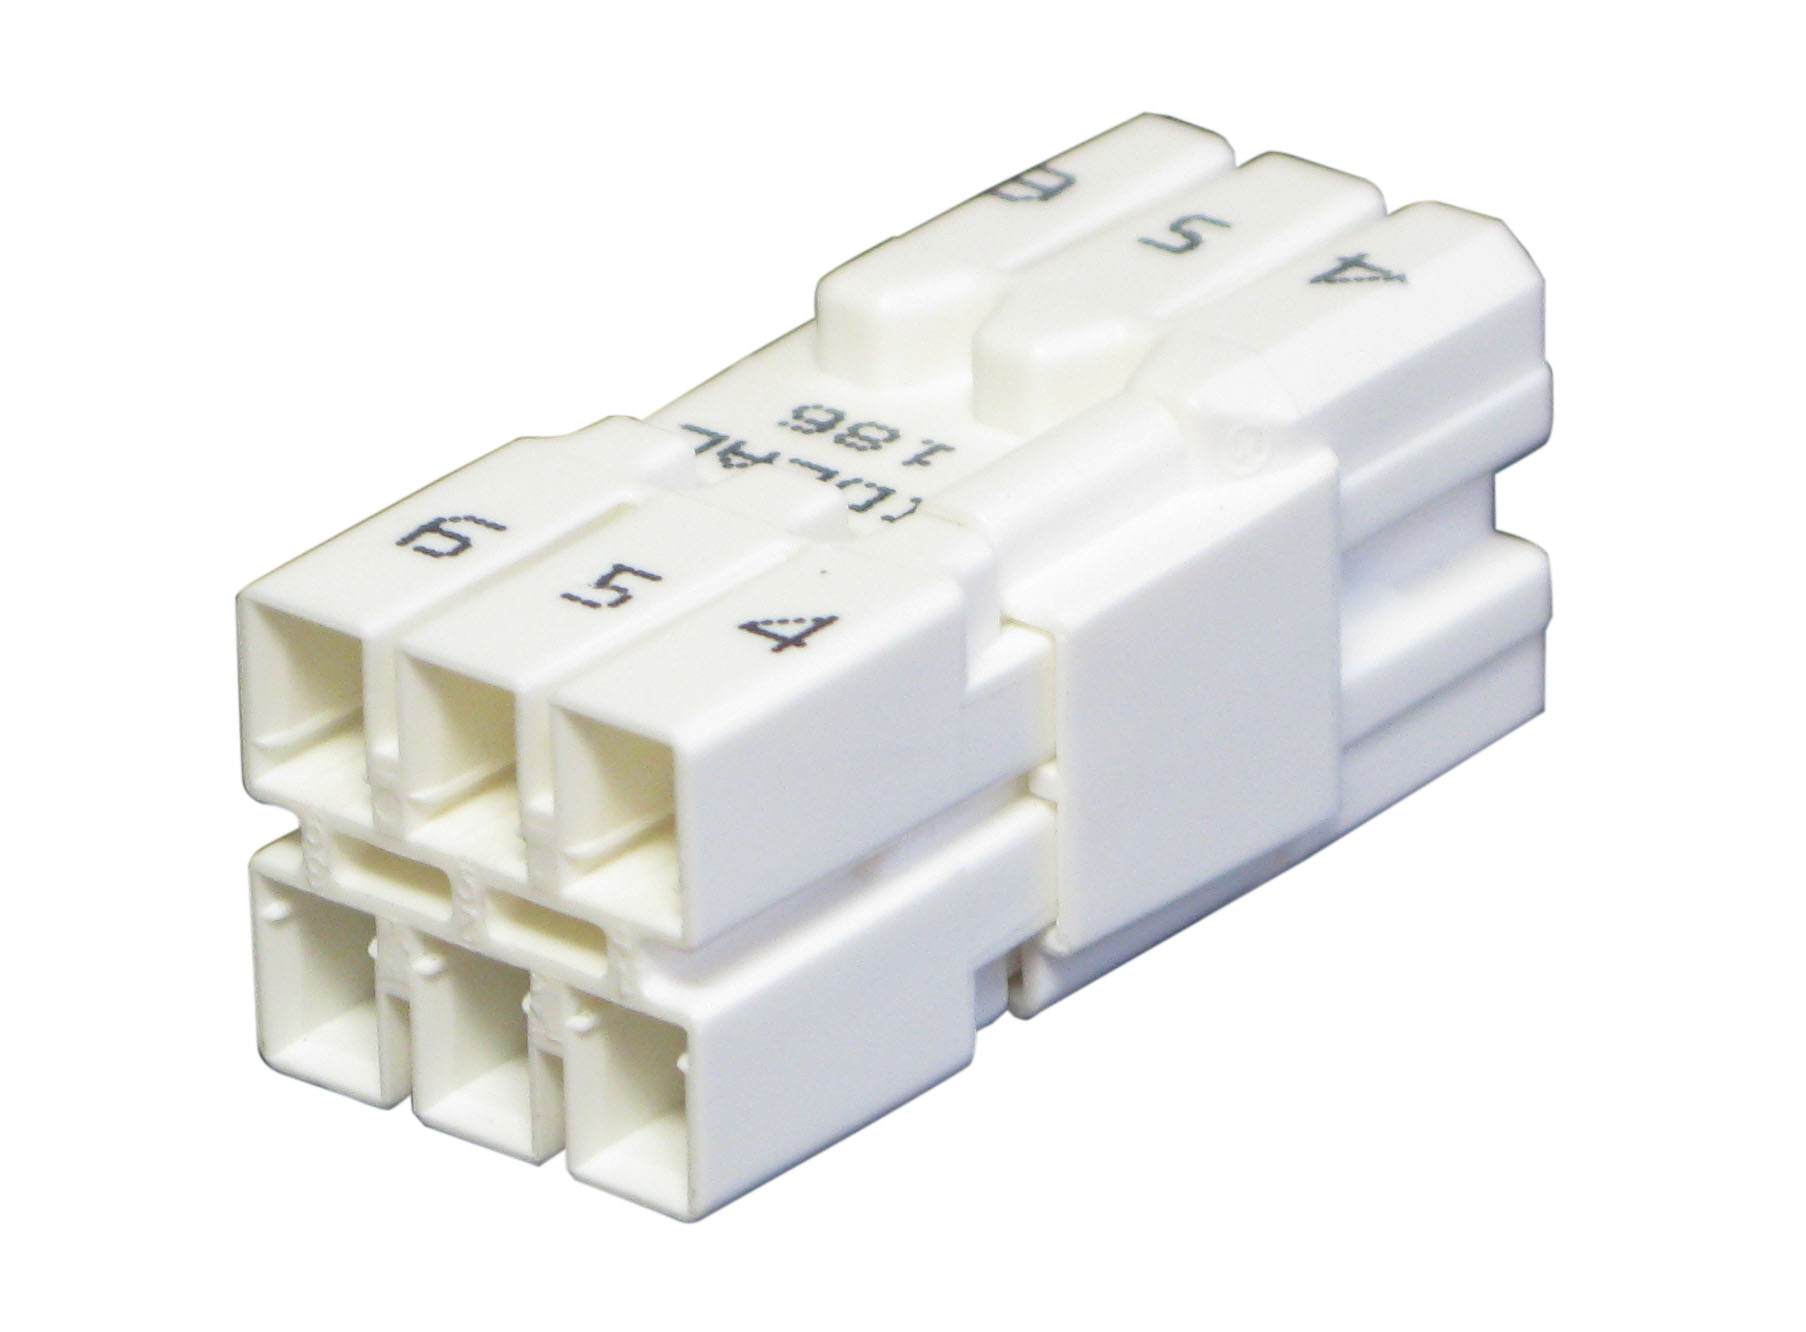 PowerPlug® Luminaire Disconnect, Model 184 Male, Box of 2,000